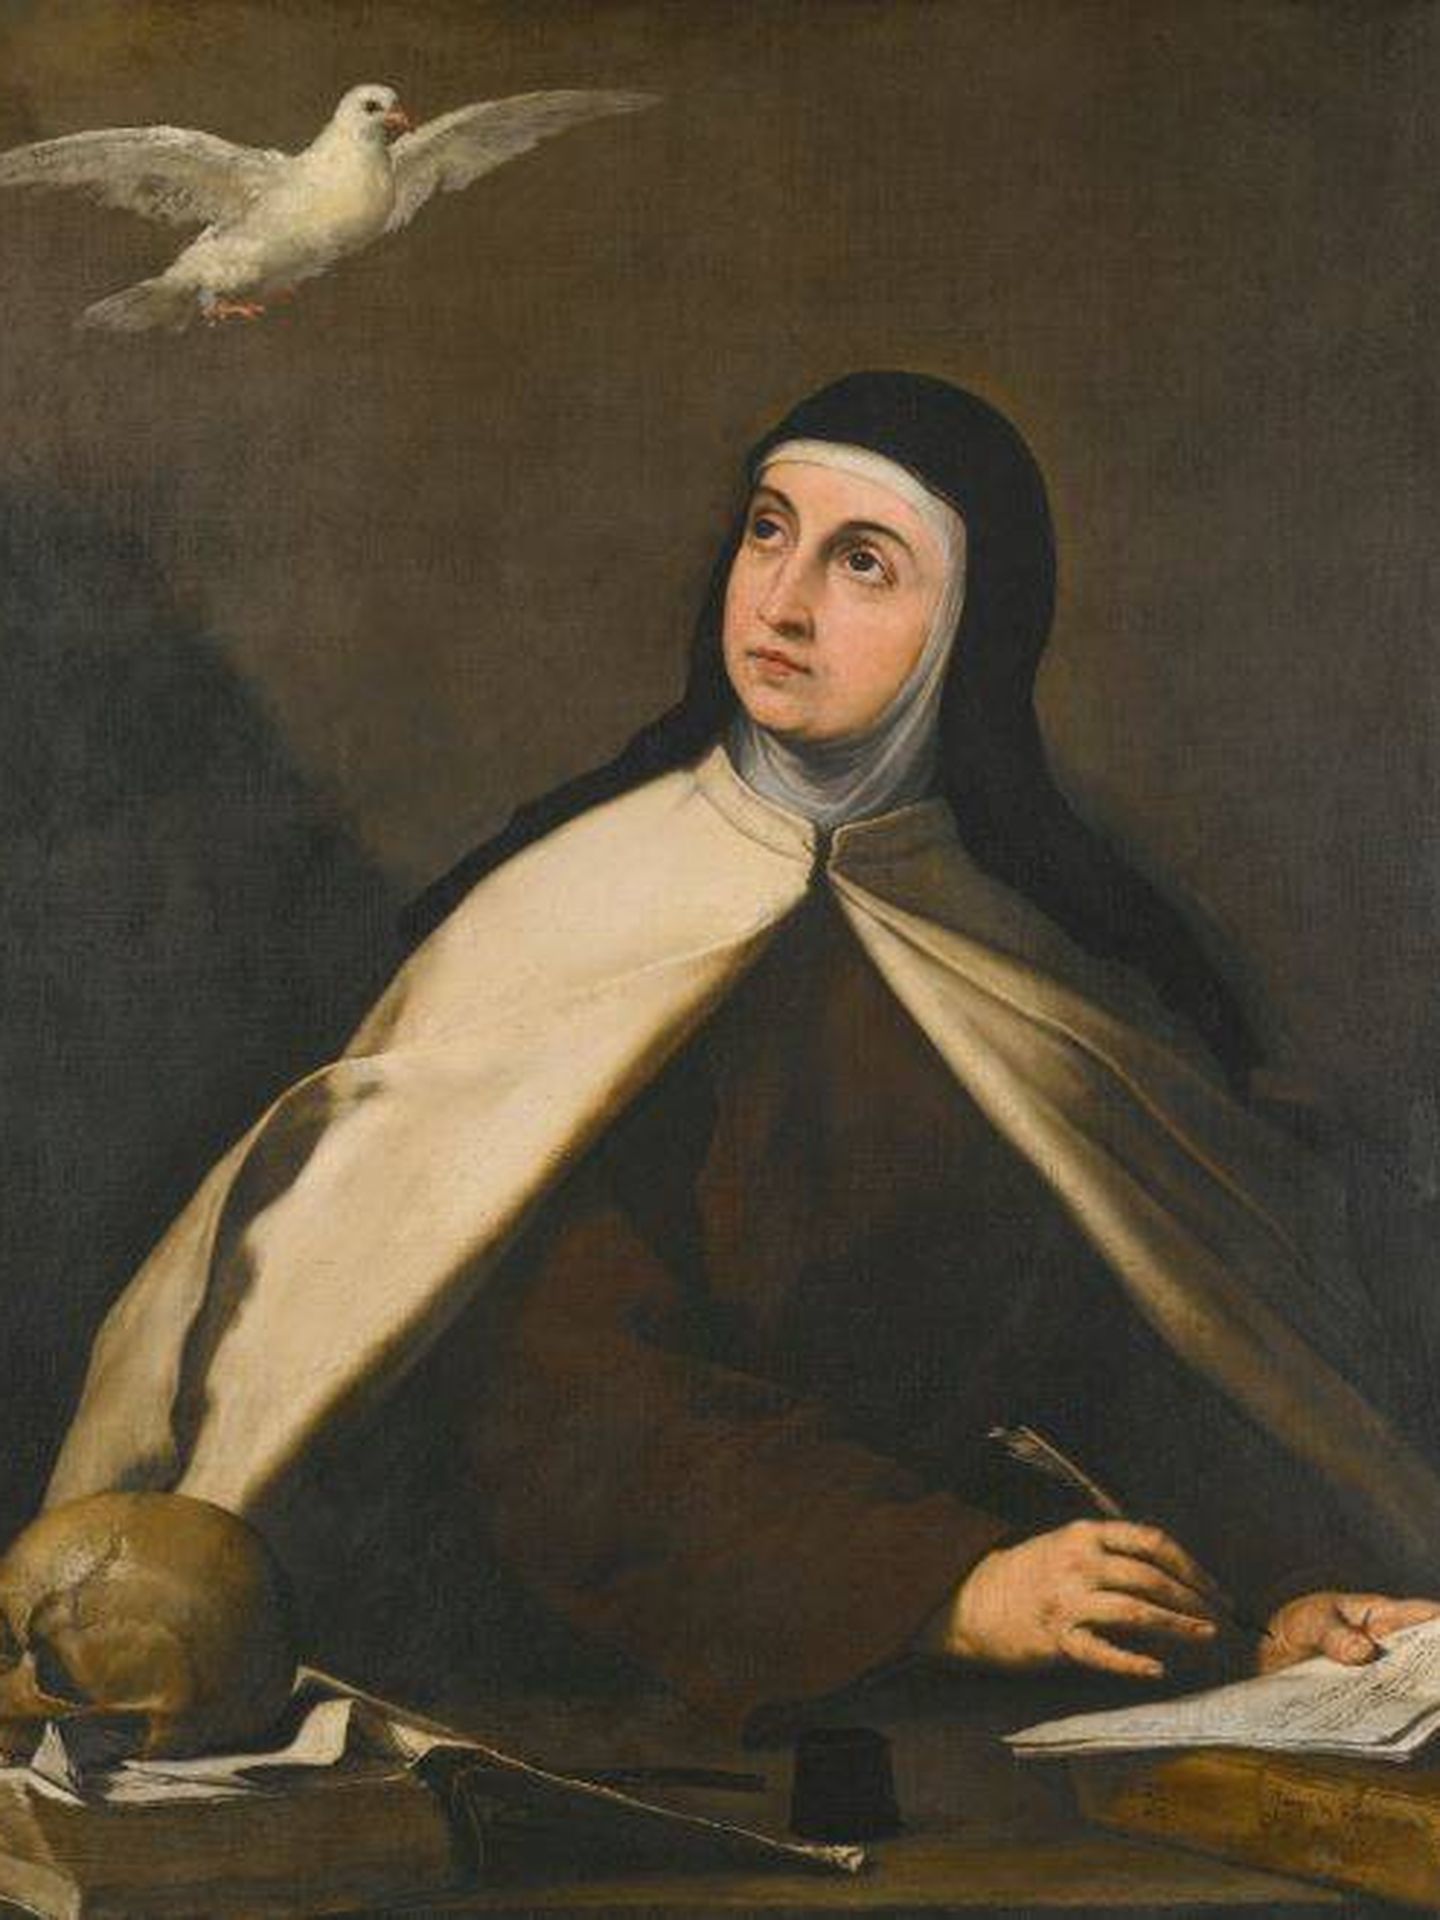 La Santa Teresa de José Ribera. (Sotheby's)